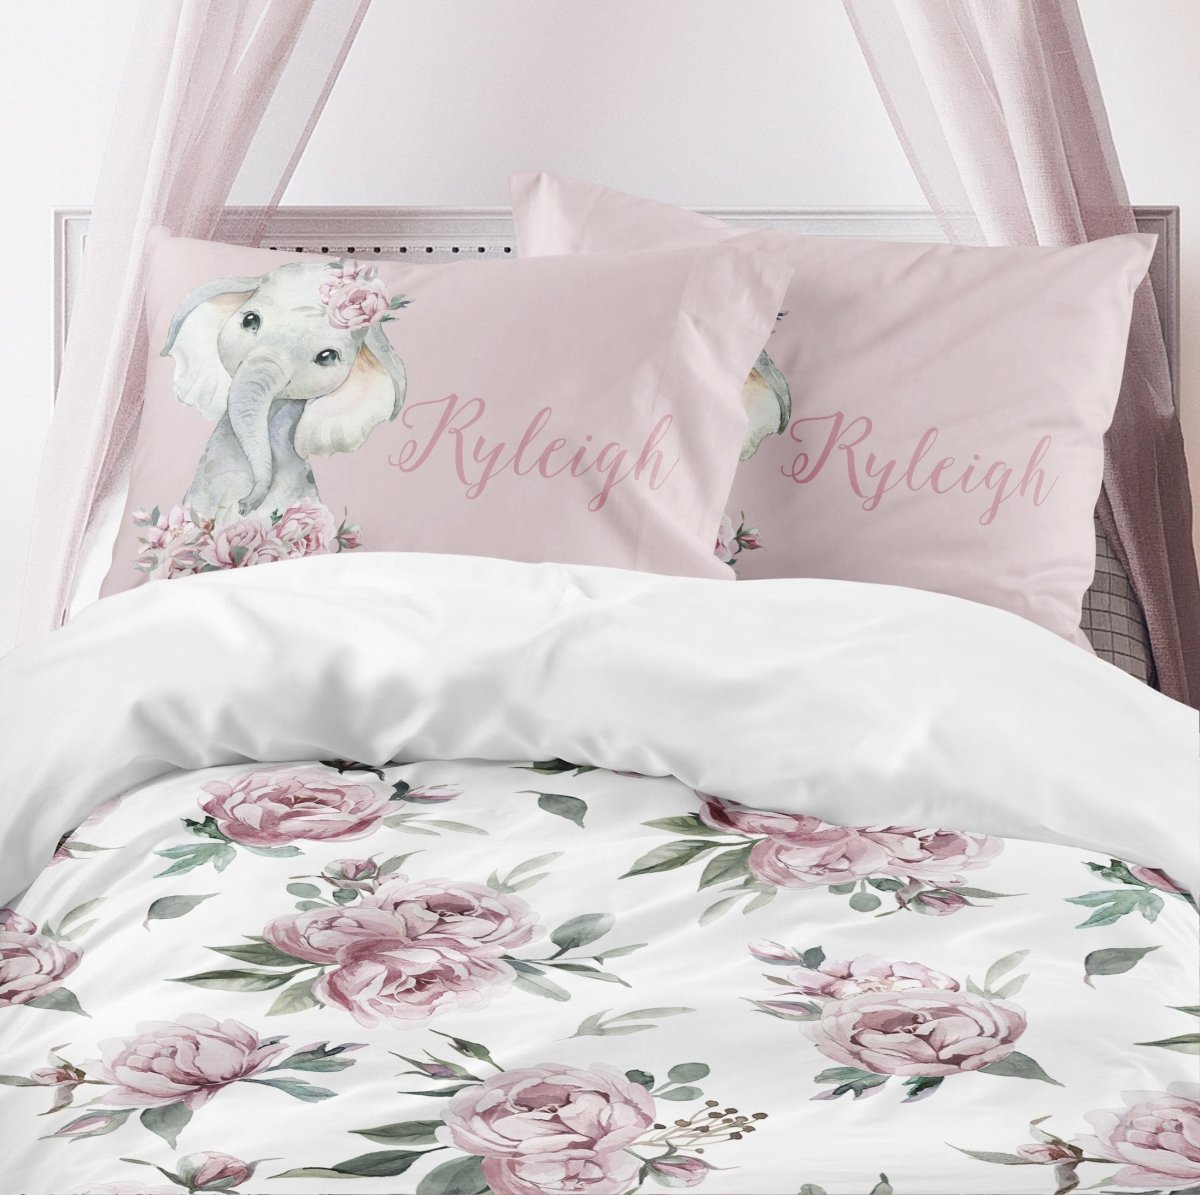 Floral Elephant Personalized Kids Bedding Set (Comforter or Duvet Cover)